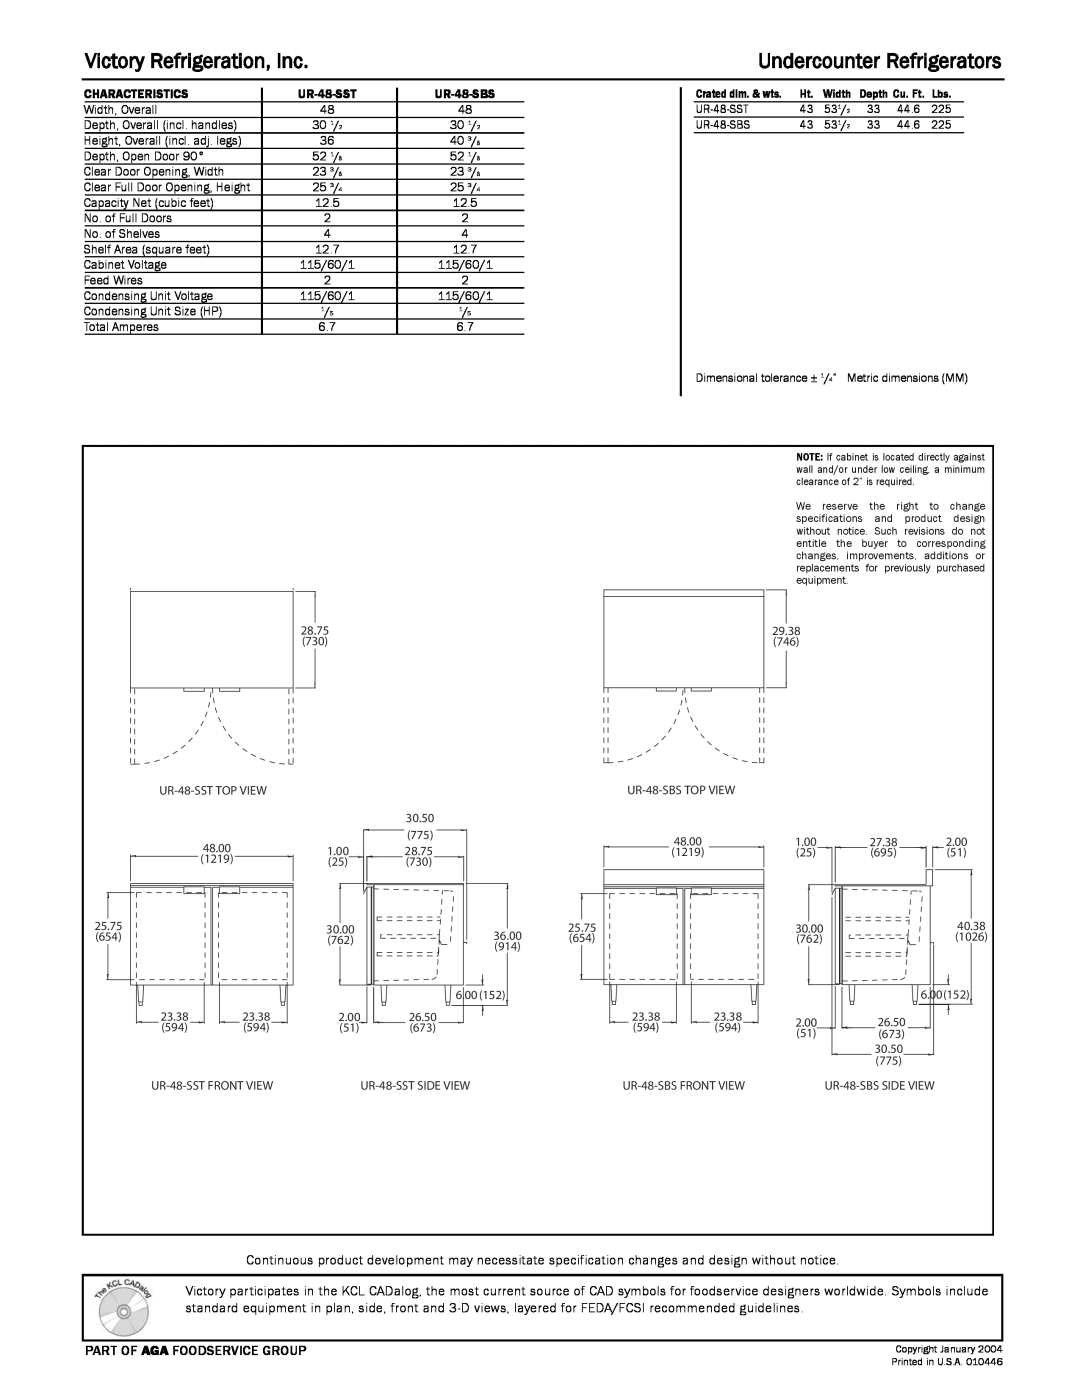 Victory Refrigeration UR-48-SST, UR-48-SBS specifications Victory Refrigeration, Inc, Undercounter Refrigerators 